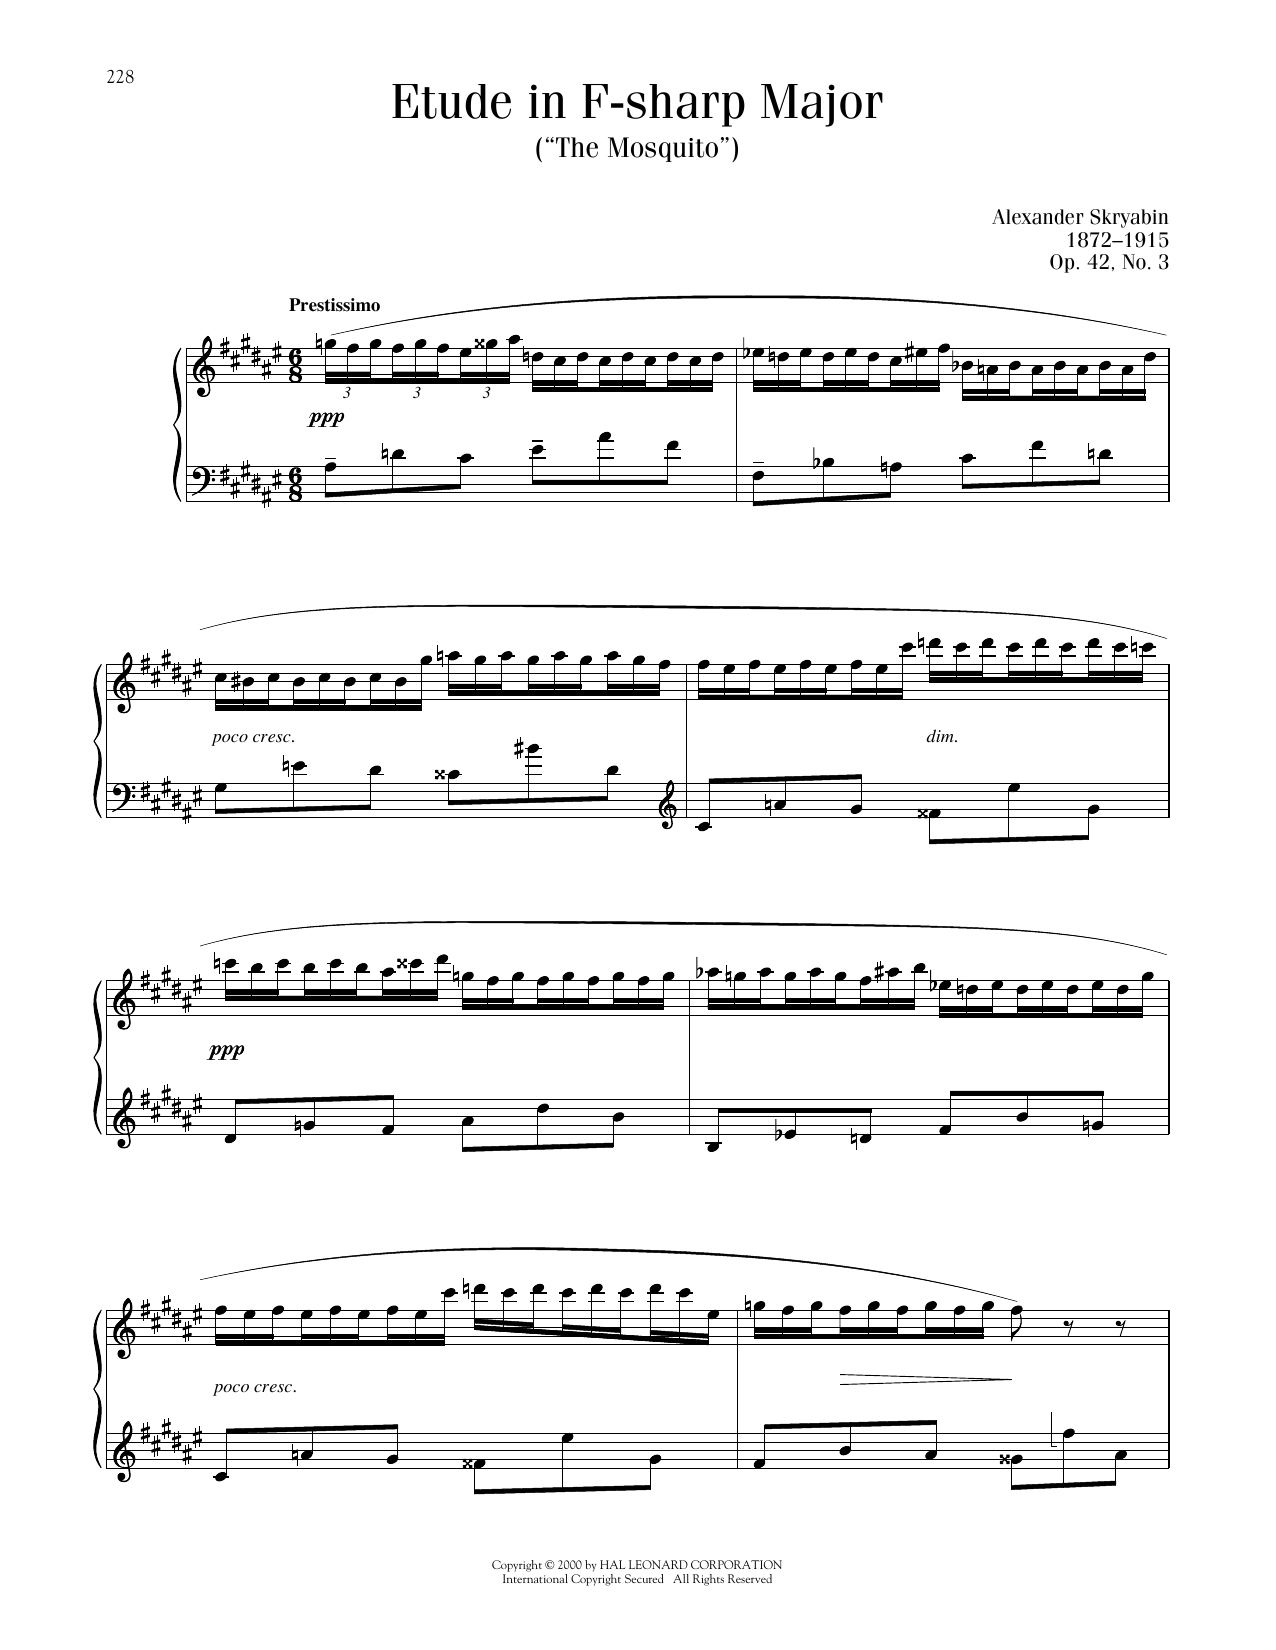 Alexander Scriabin Etude, Op. 42, No. 3 sheet music notes printable PDF score